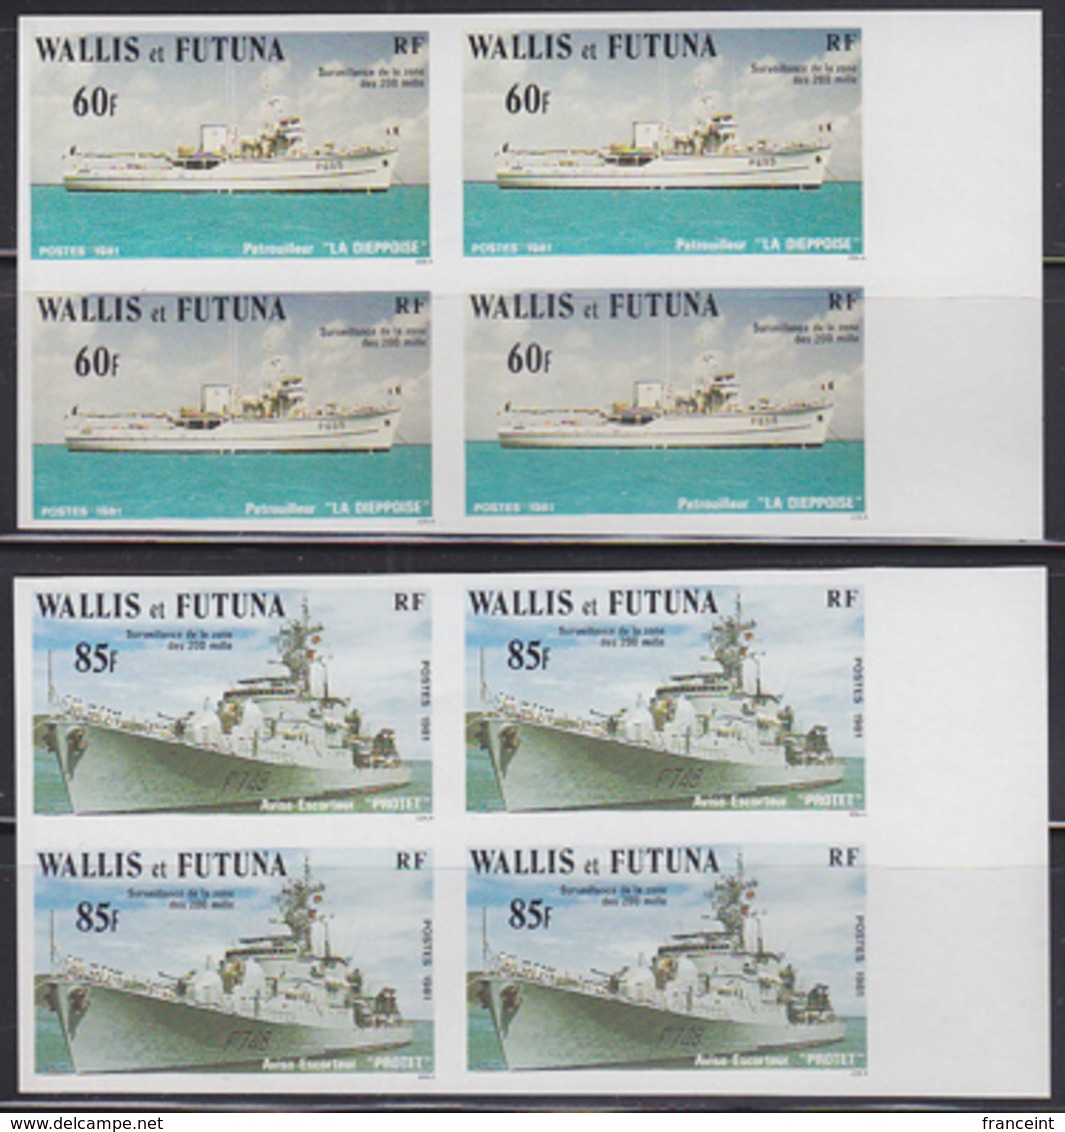 WALLIS & FUTUNA (1981) Warships. Set Of 2 Imperforate Blocks Of 4. Scott Nos 276-7, Yvert Nos 279-80. - Imperforates, Proofs & Errors